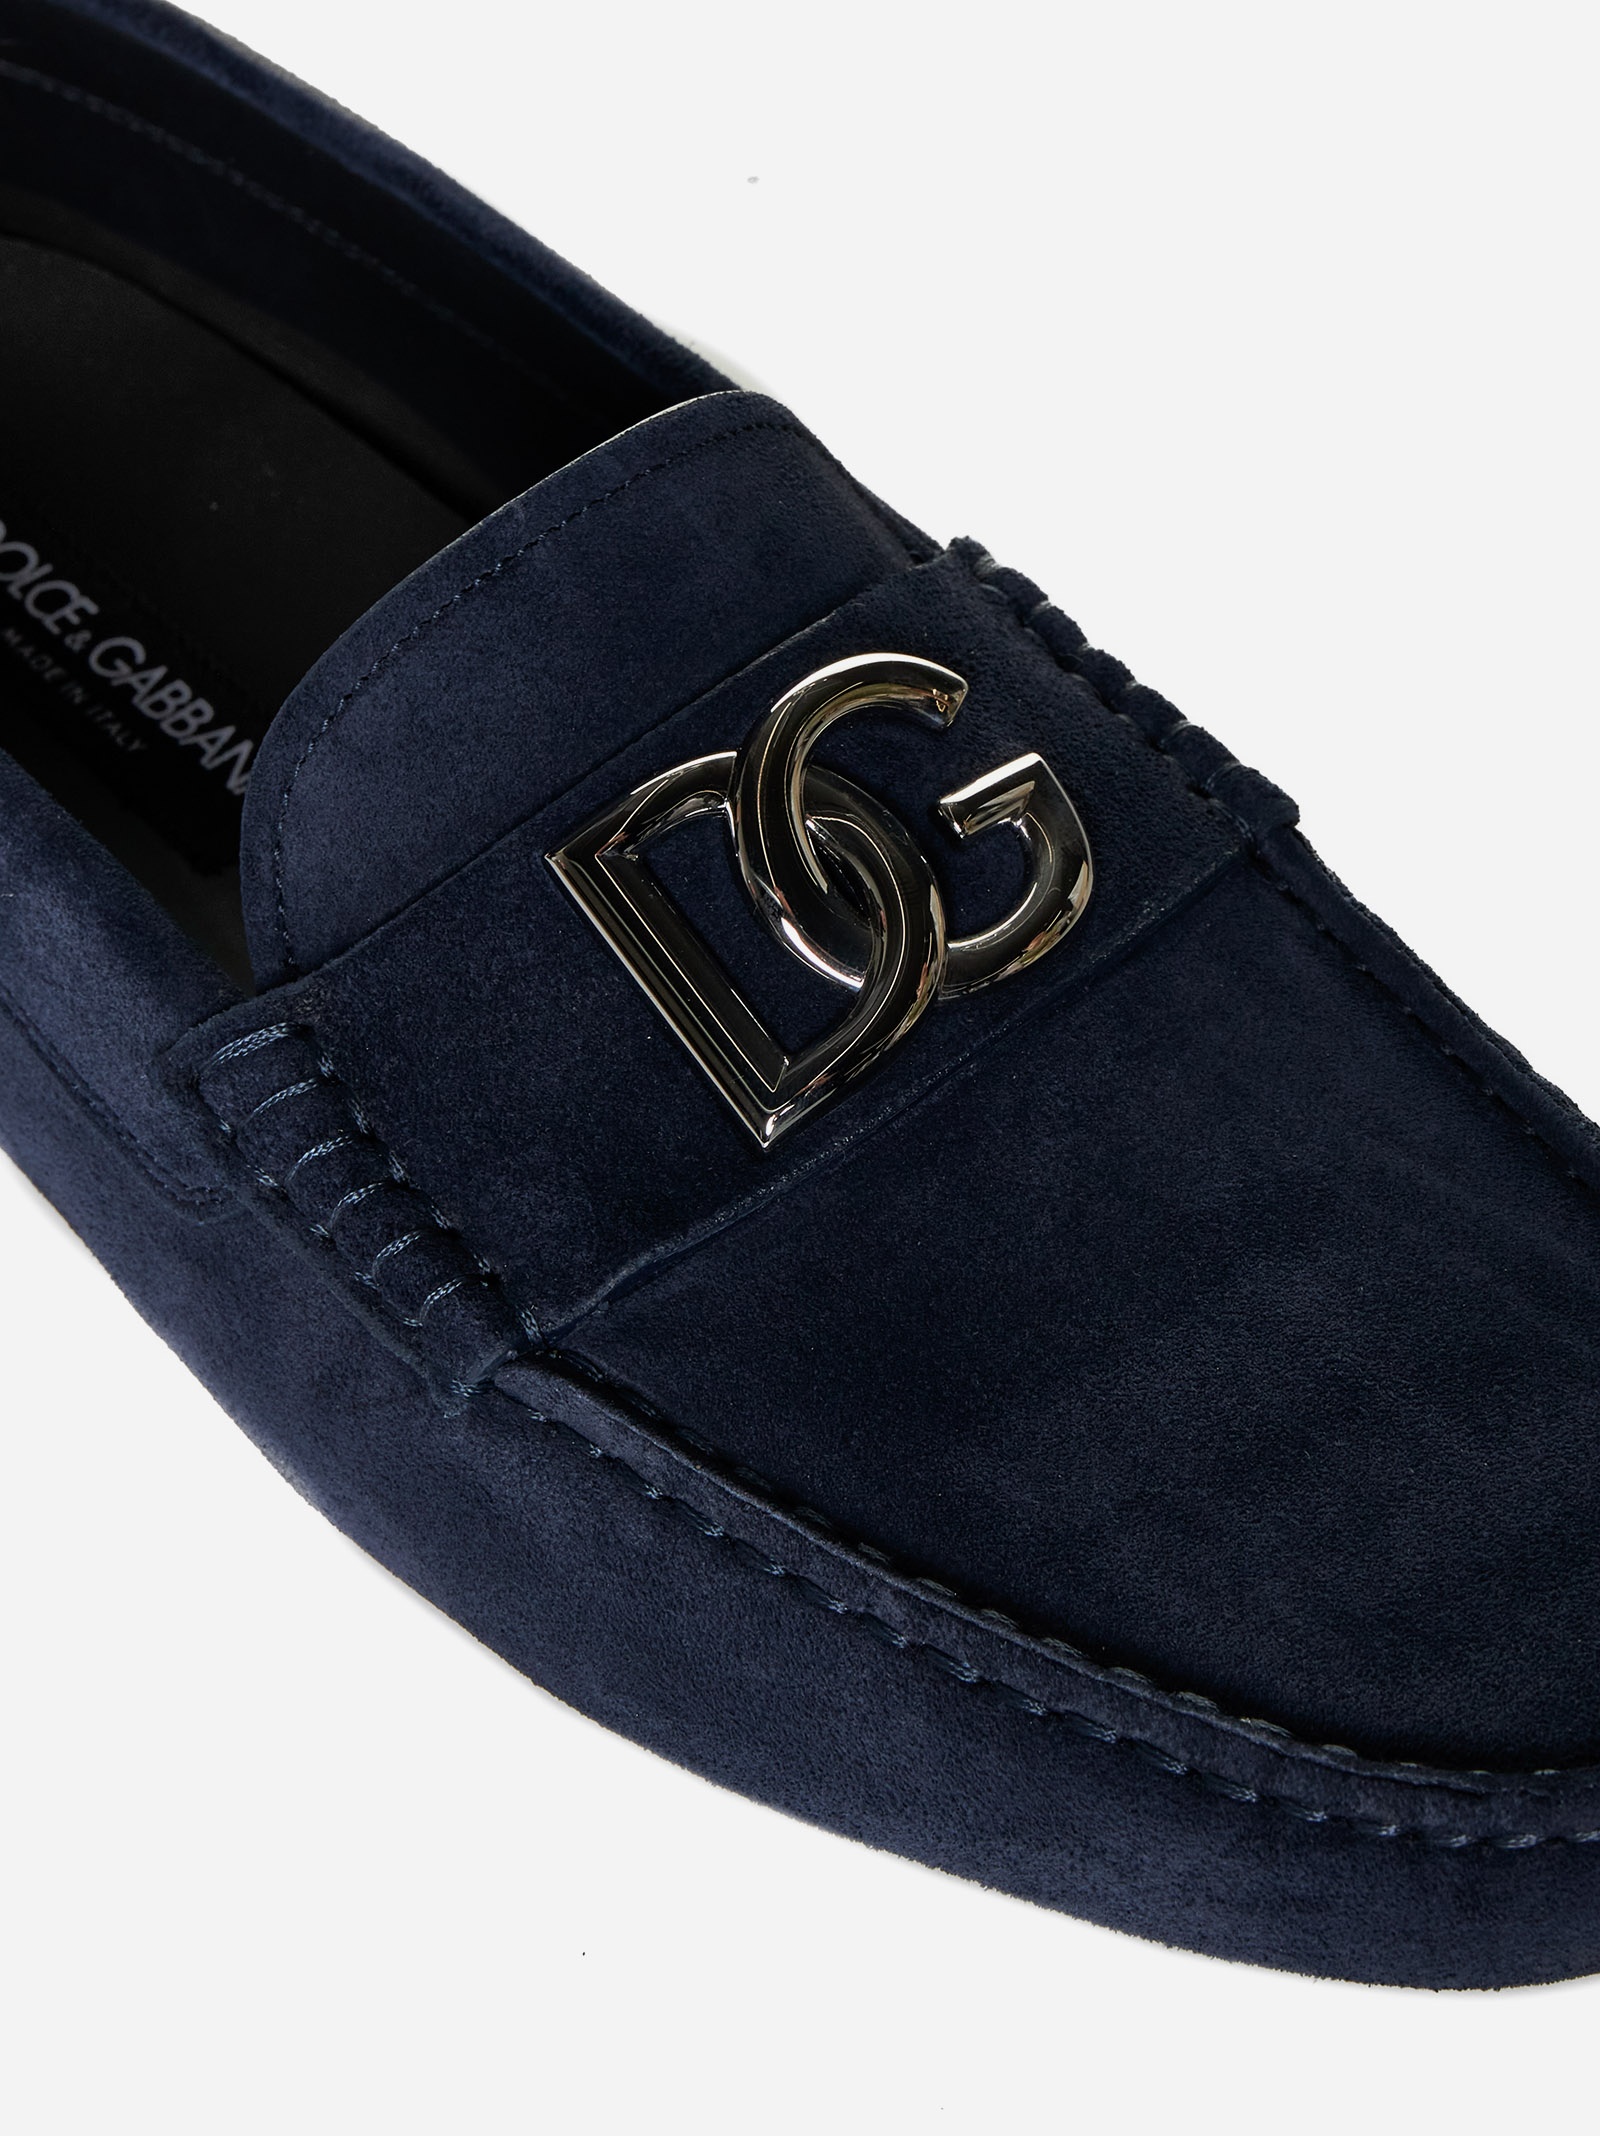 DG logo suede loafers - 4